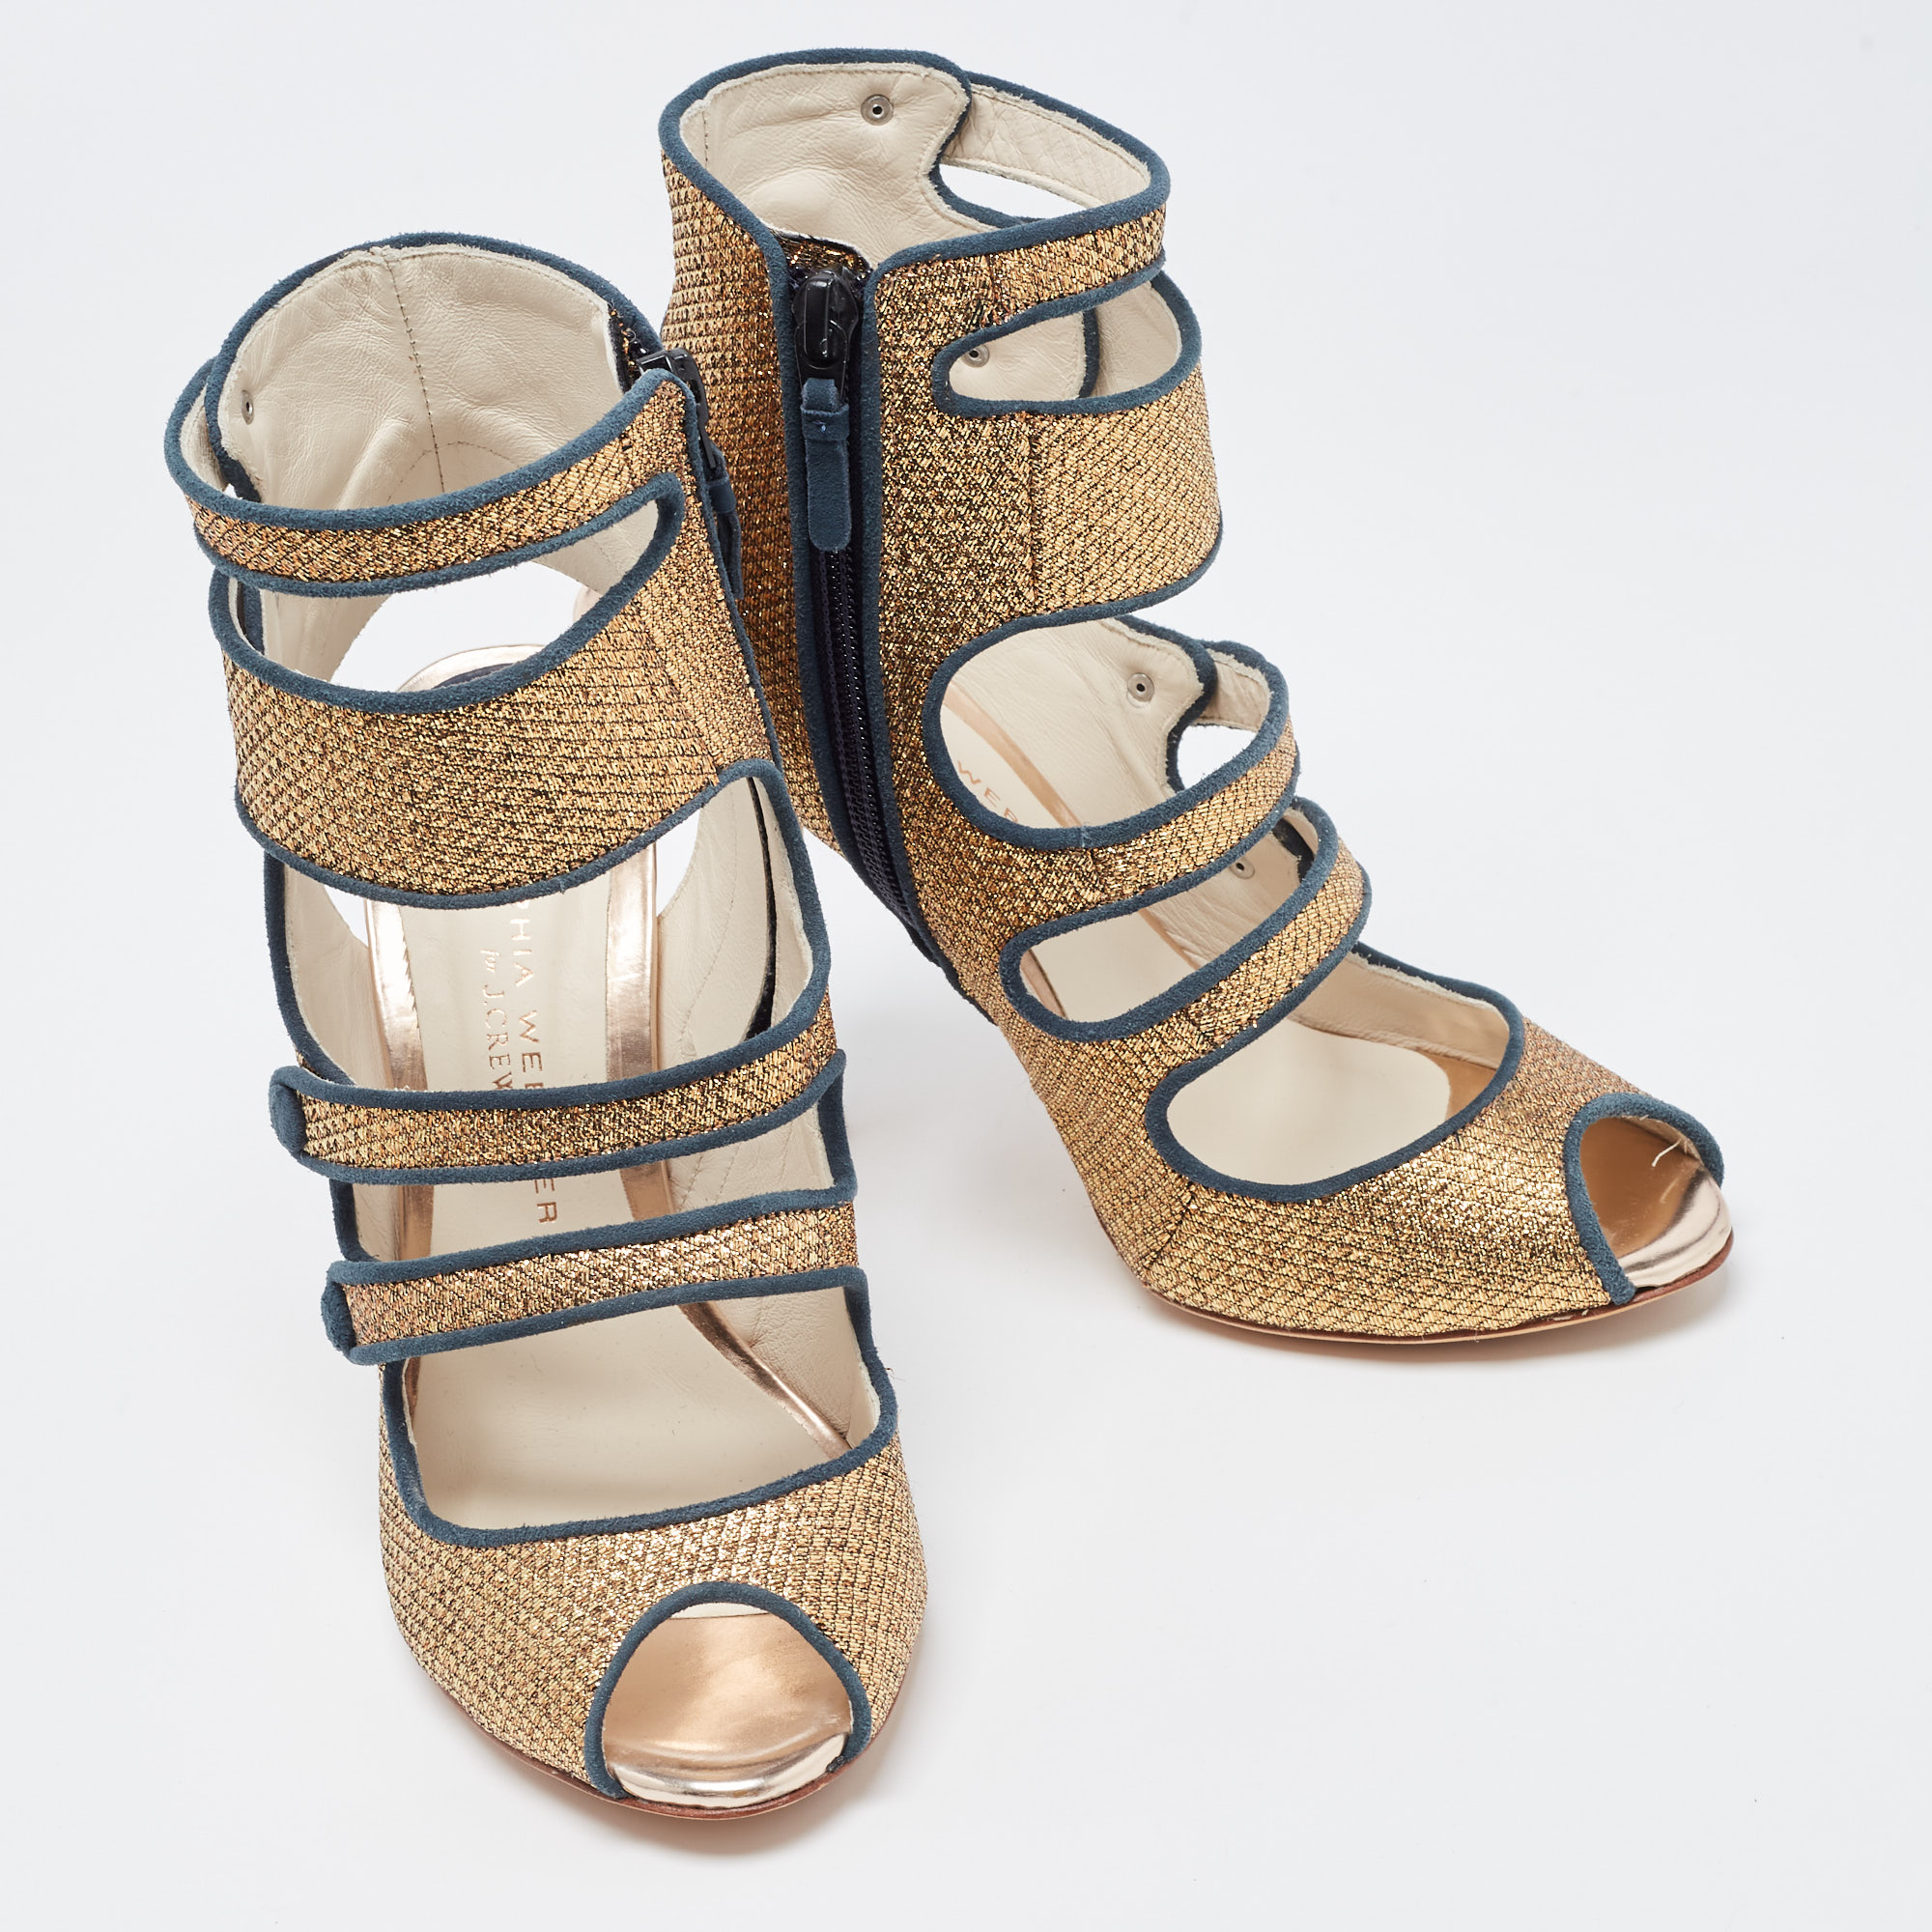 Sophia Webster Gold Glitter Strappy Sandals Size 36.5